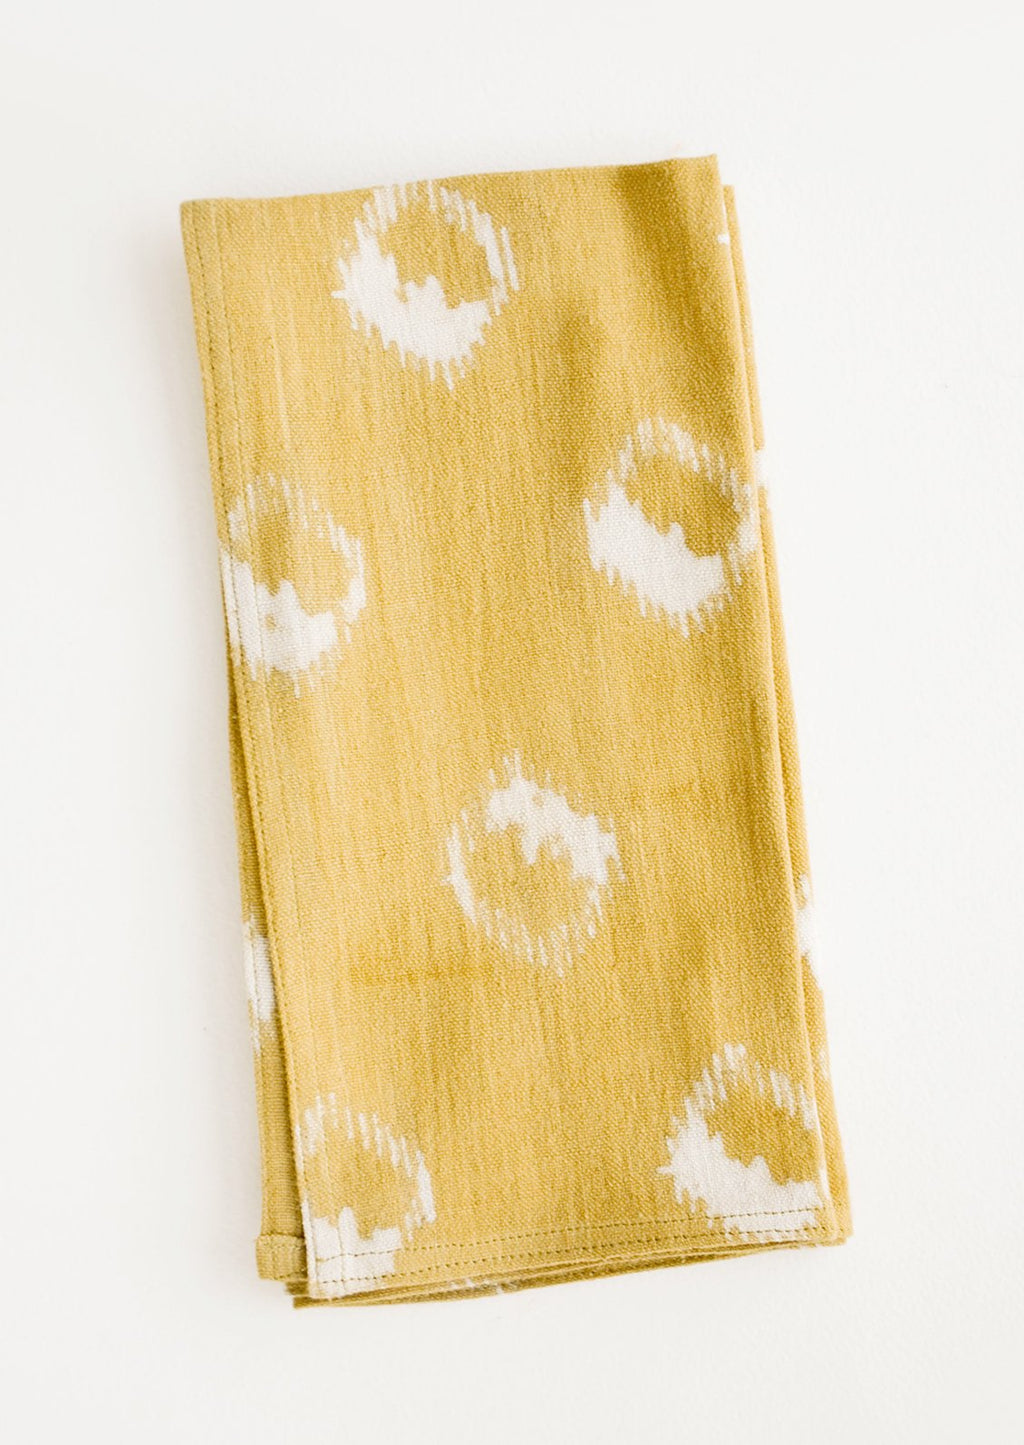 Mustard: Block print cotton dinner napkin in mustard yellow with ikat print